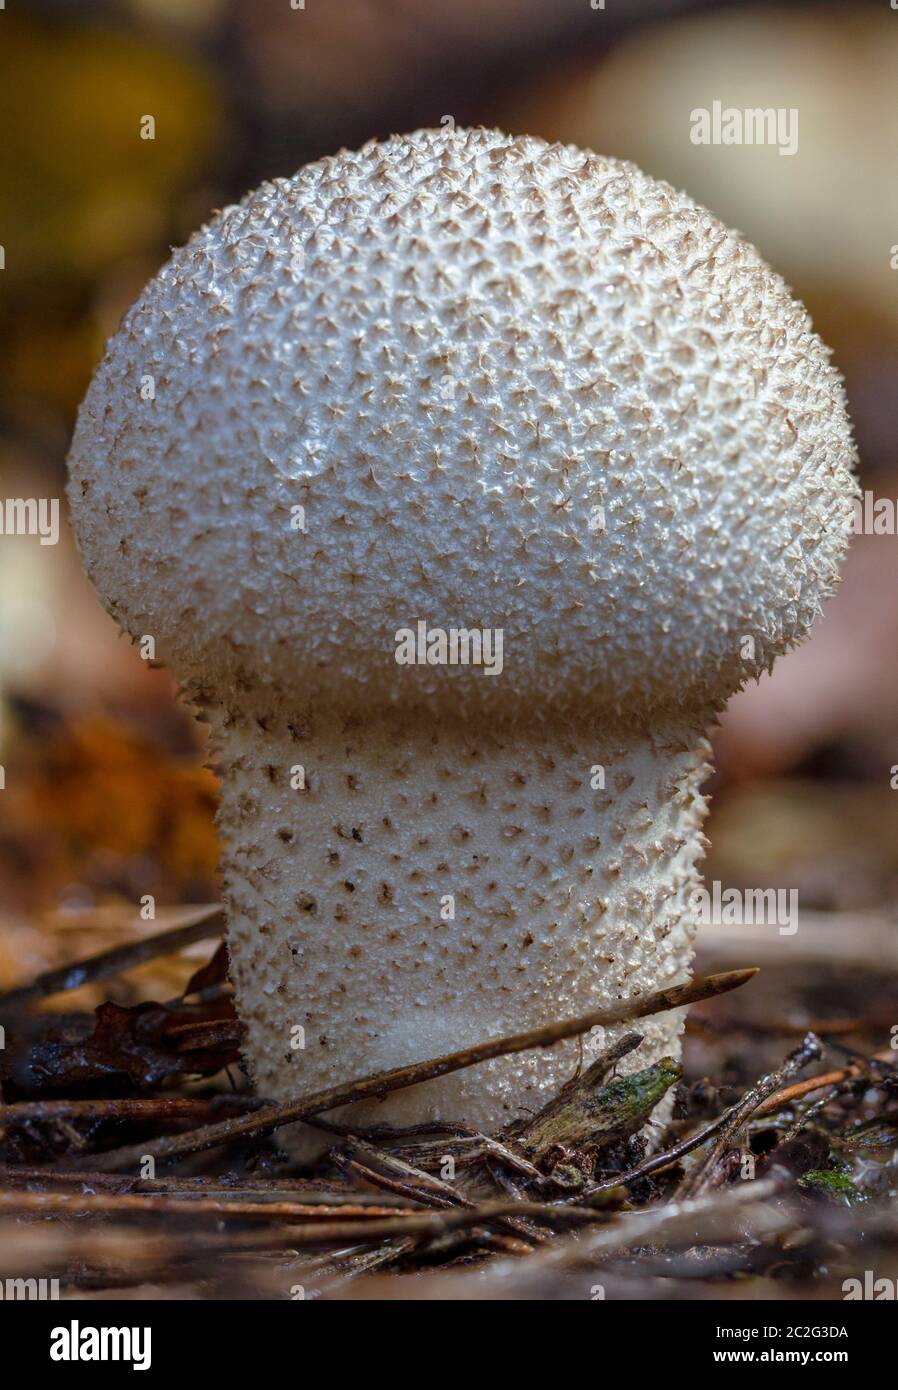 Common puffball mushroom - Lycoperdon perlatum - growing in green sphagnum moss close up Stock Photo